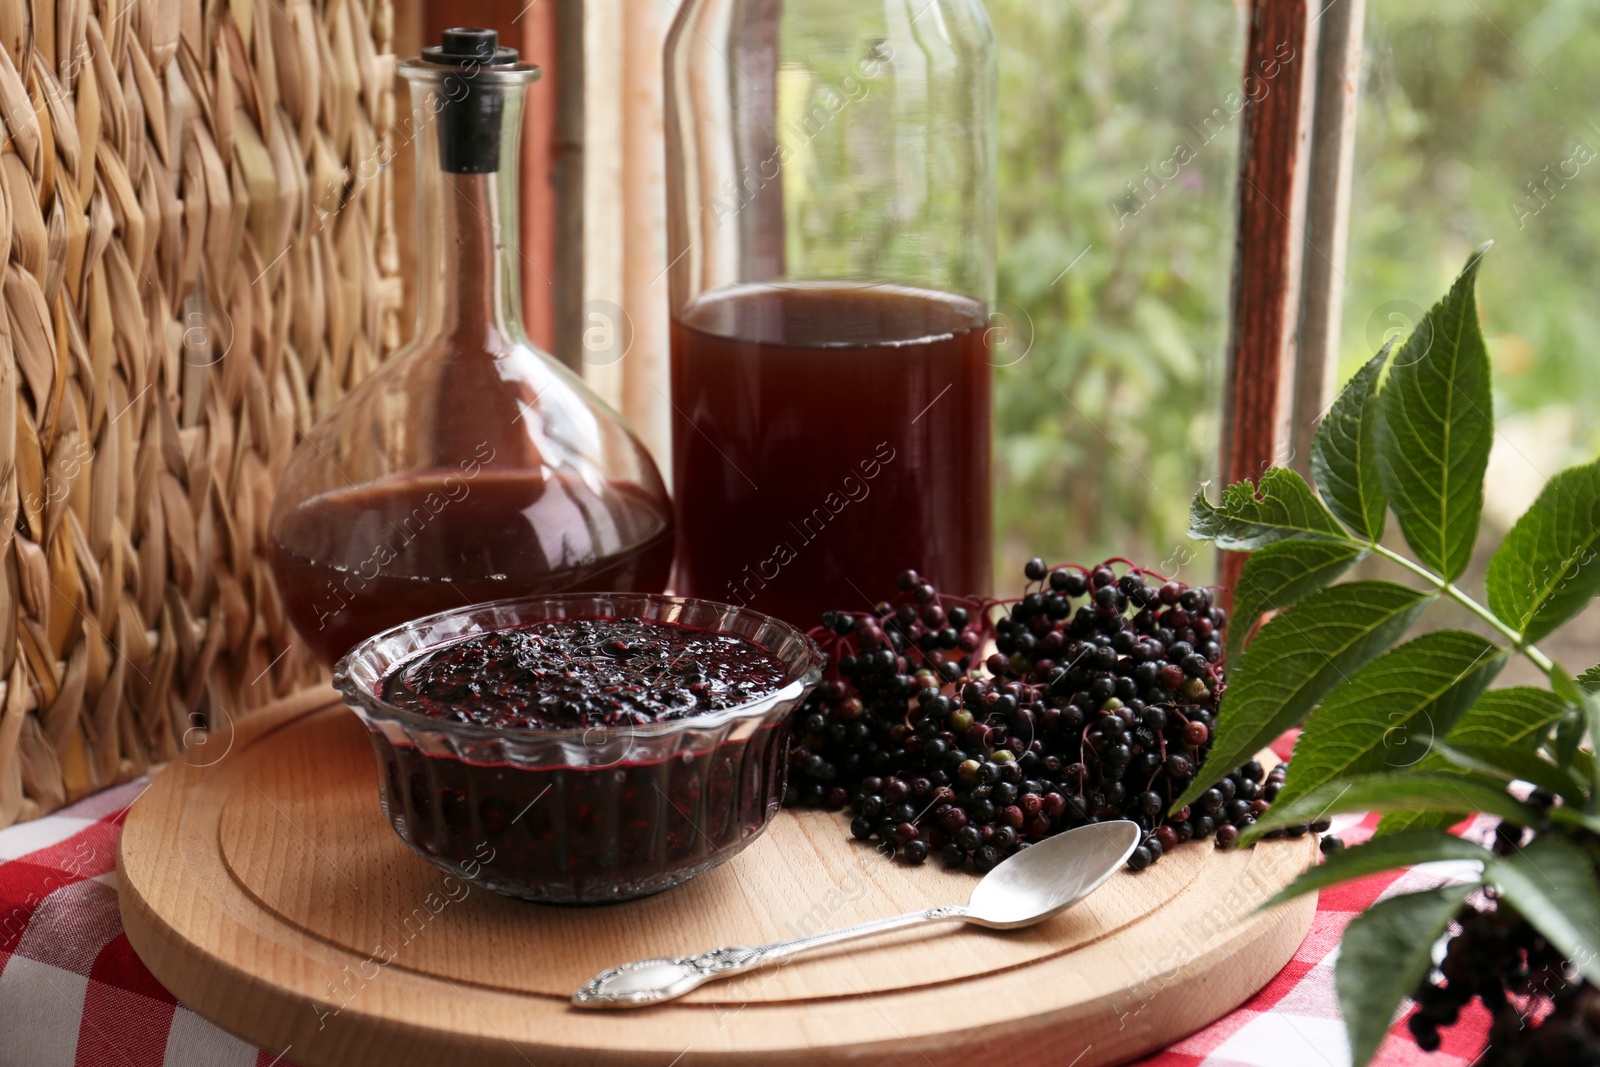 Photo of Elderberry drink and jam with Sambucus berries on table near window